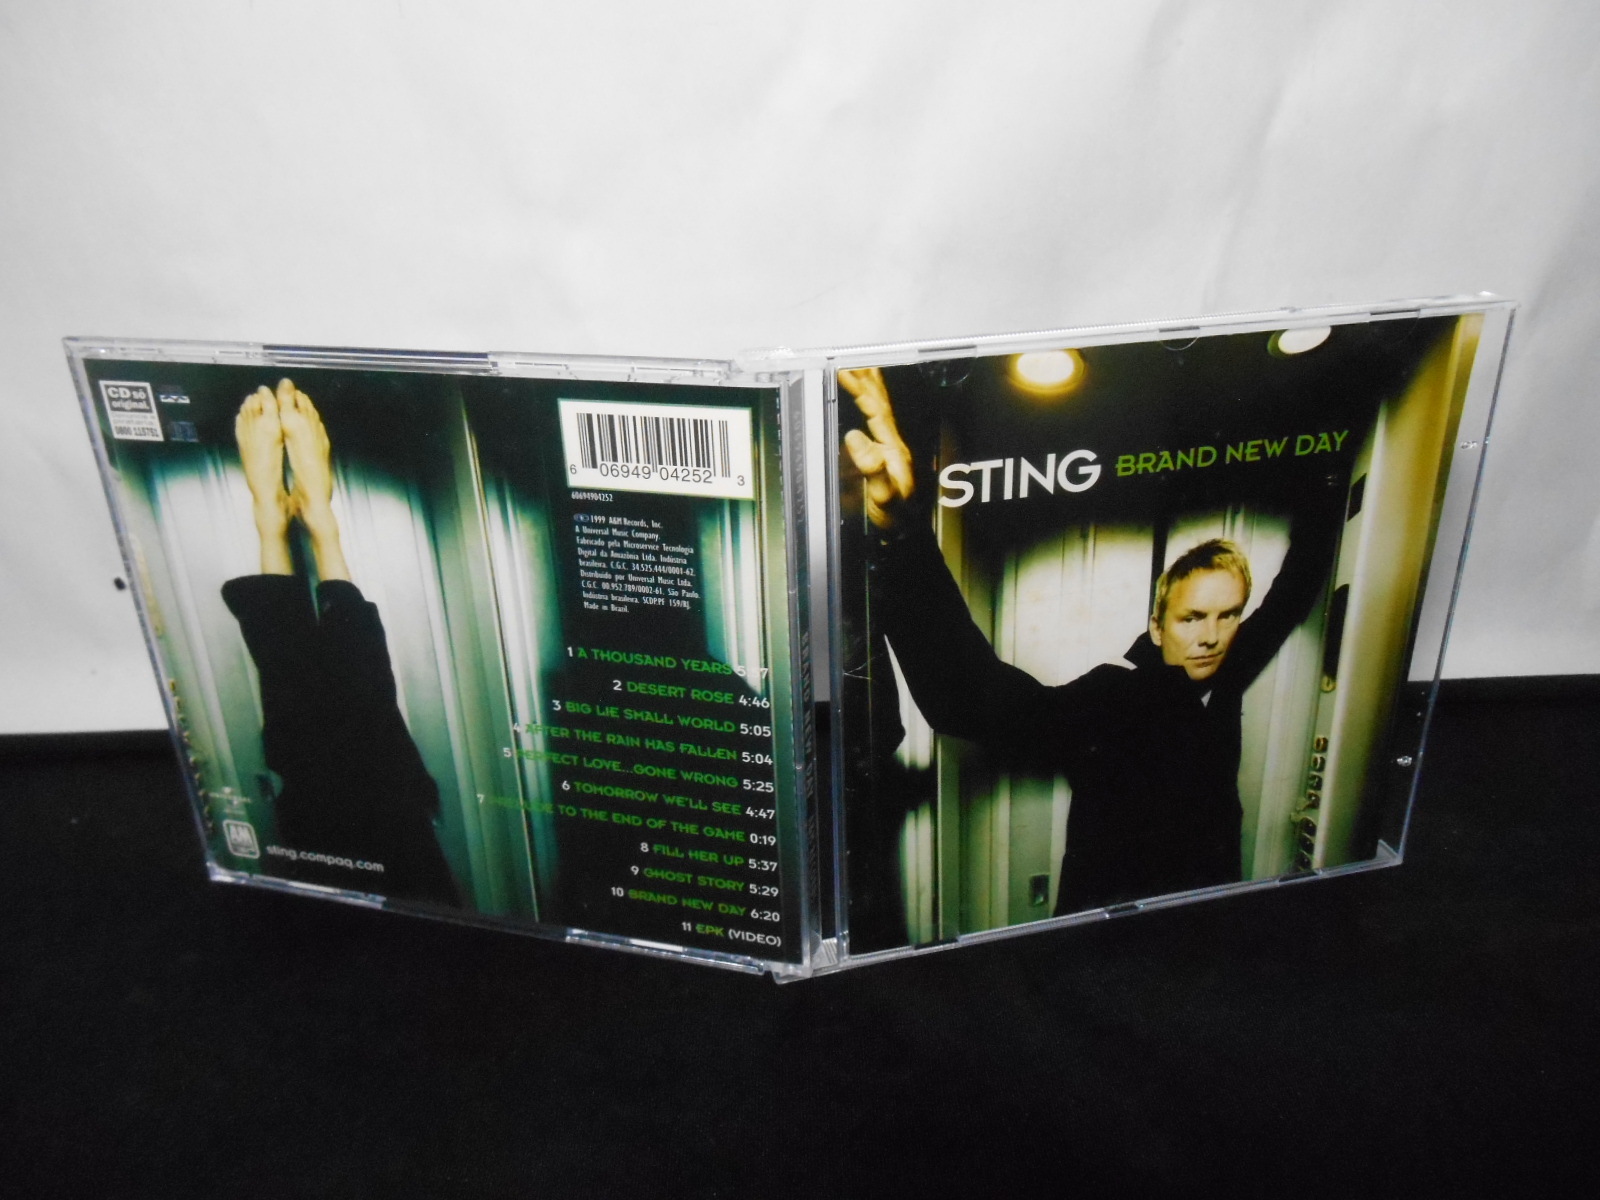 CD - Sting - Brand New Day